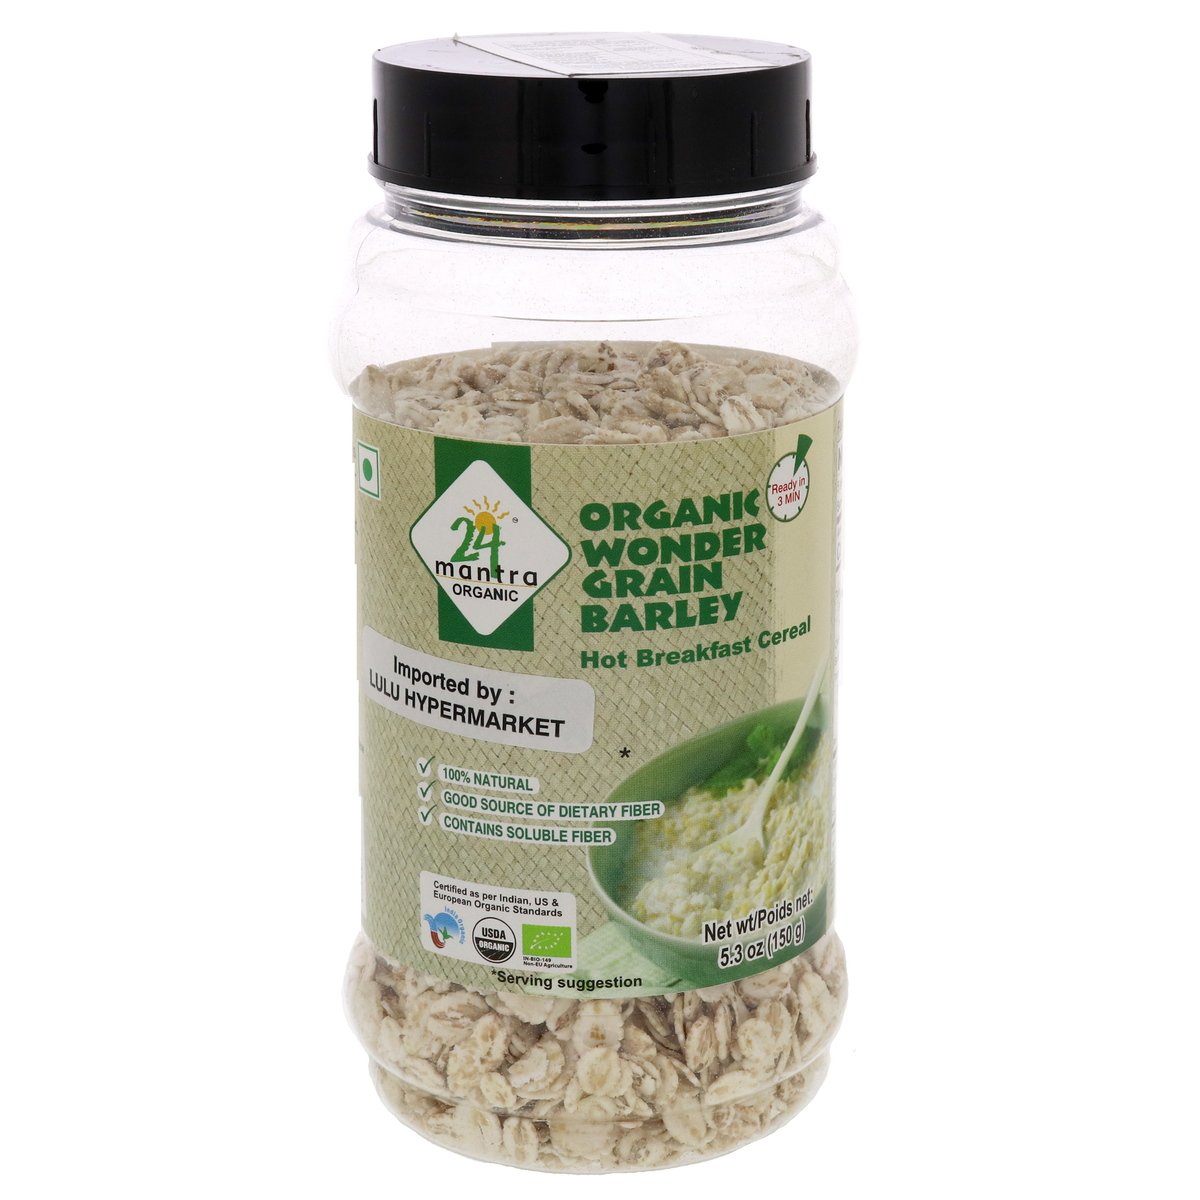 24 Mantra Organic Wonder Grain Barley 150 g